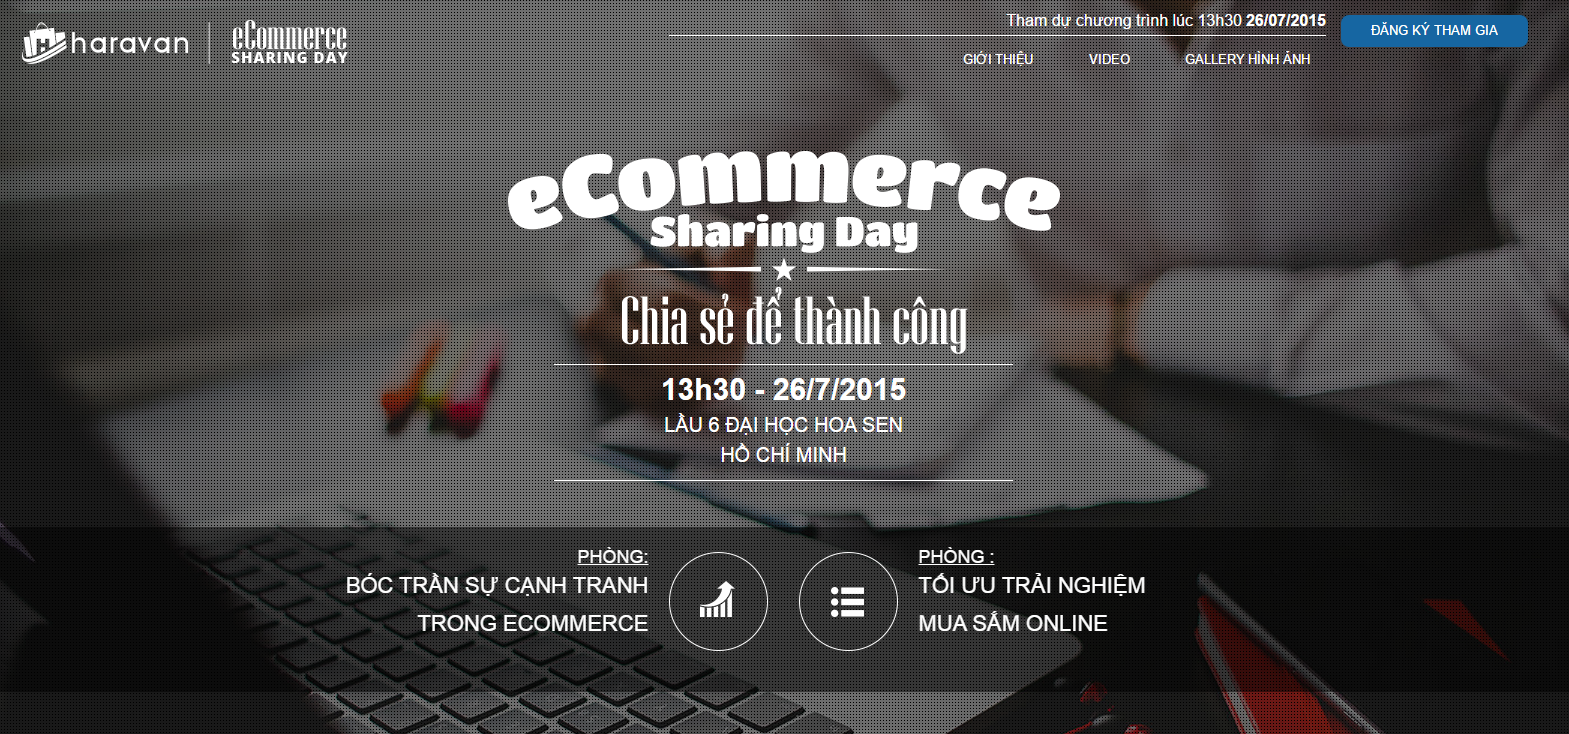 ecommerce sharing day thang 7 hinh anh